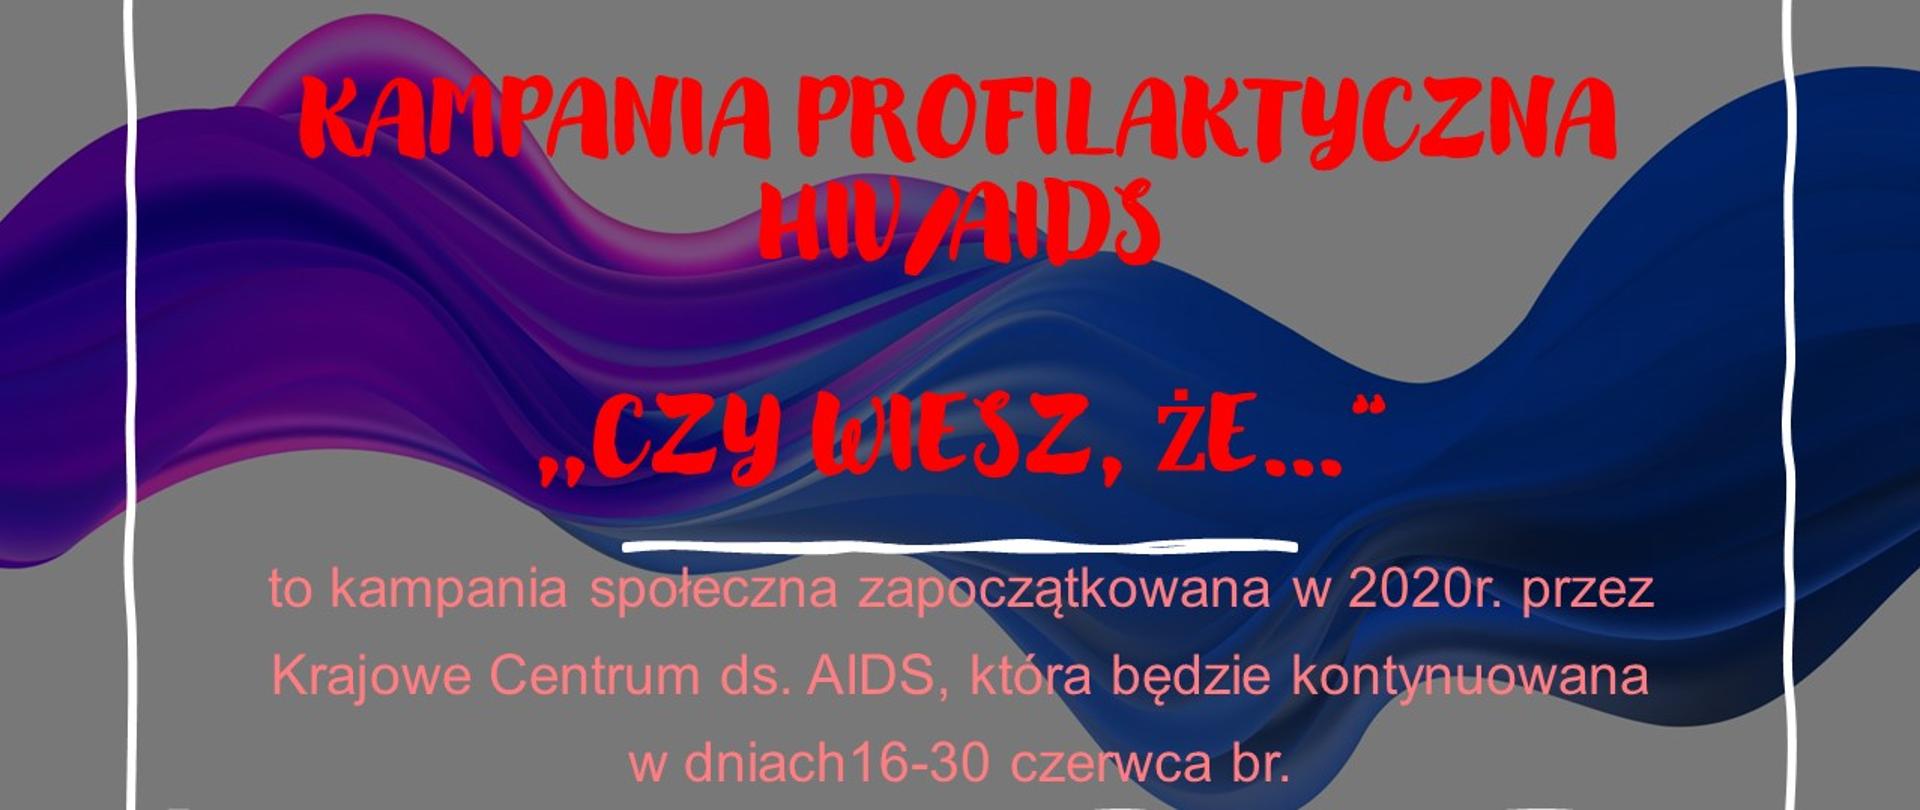 Kampania profilaktyczna HIV/AIDS